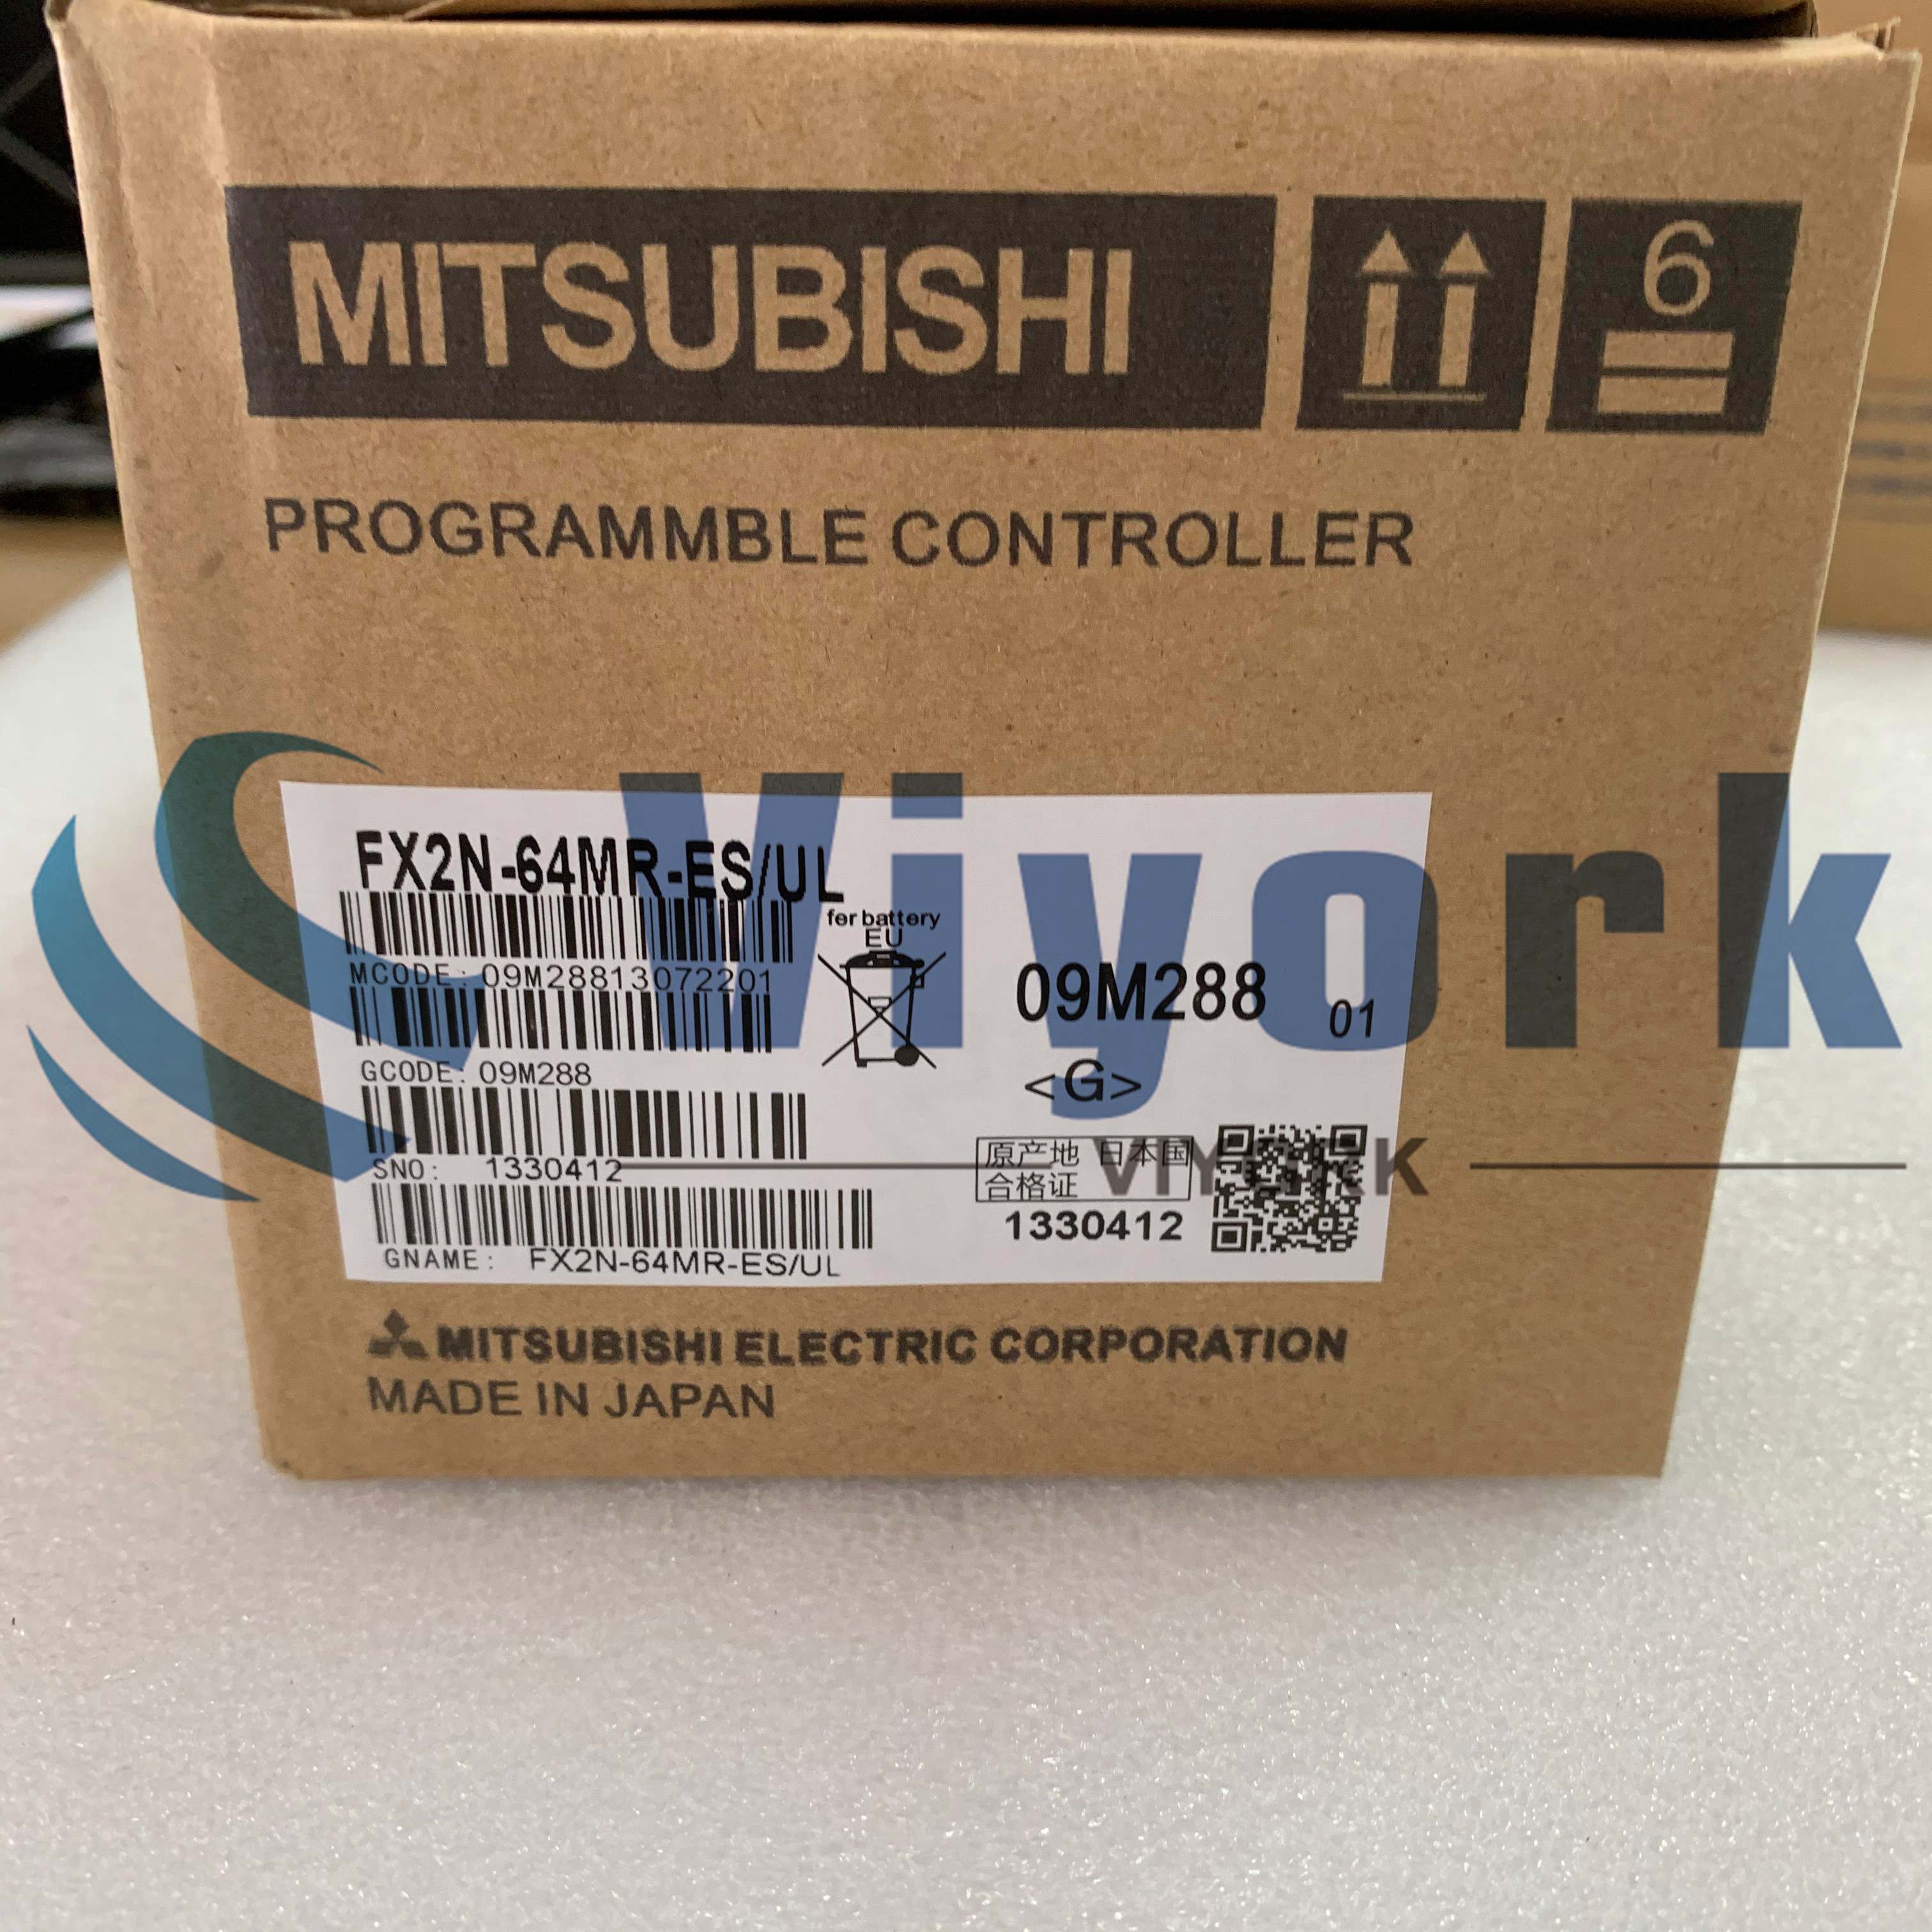 Mitsubishi FX2N-64MR-ES/UL PROGRAMMABLE CONTROLLER PLC BASE UNIT 2AMP 40W NEW